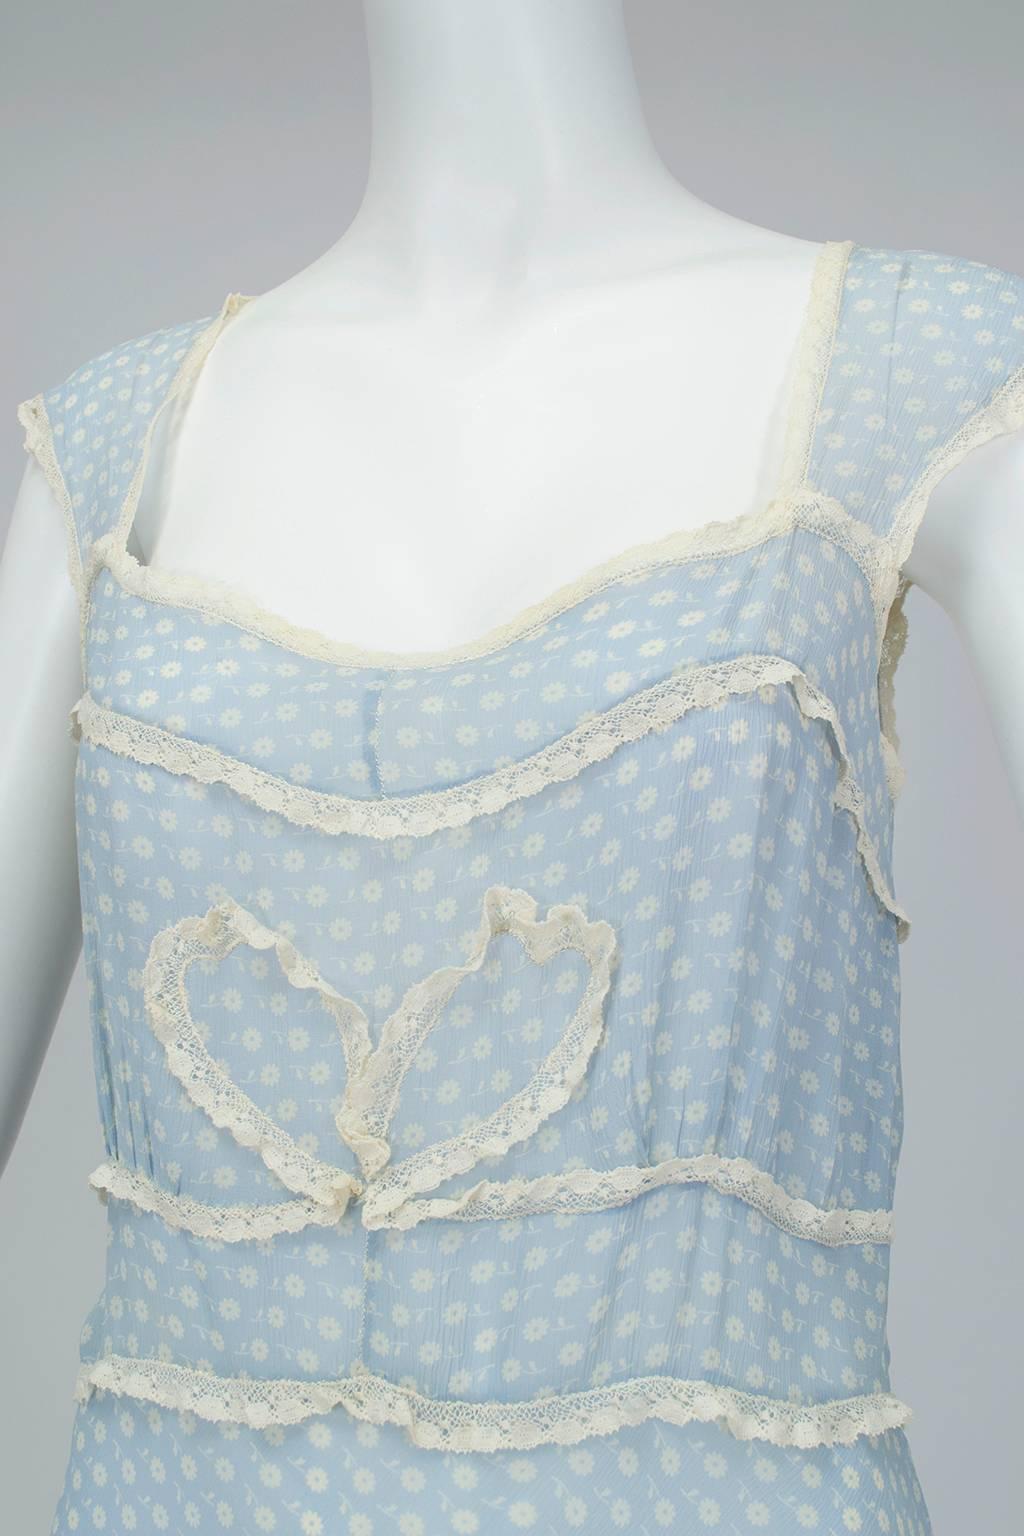 Women's Powder Blue Printed Chiffon Regency Peignoir Dressing Gown, Italy - S-M, 1930s